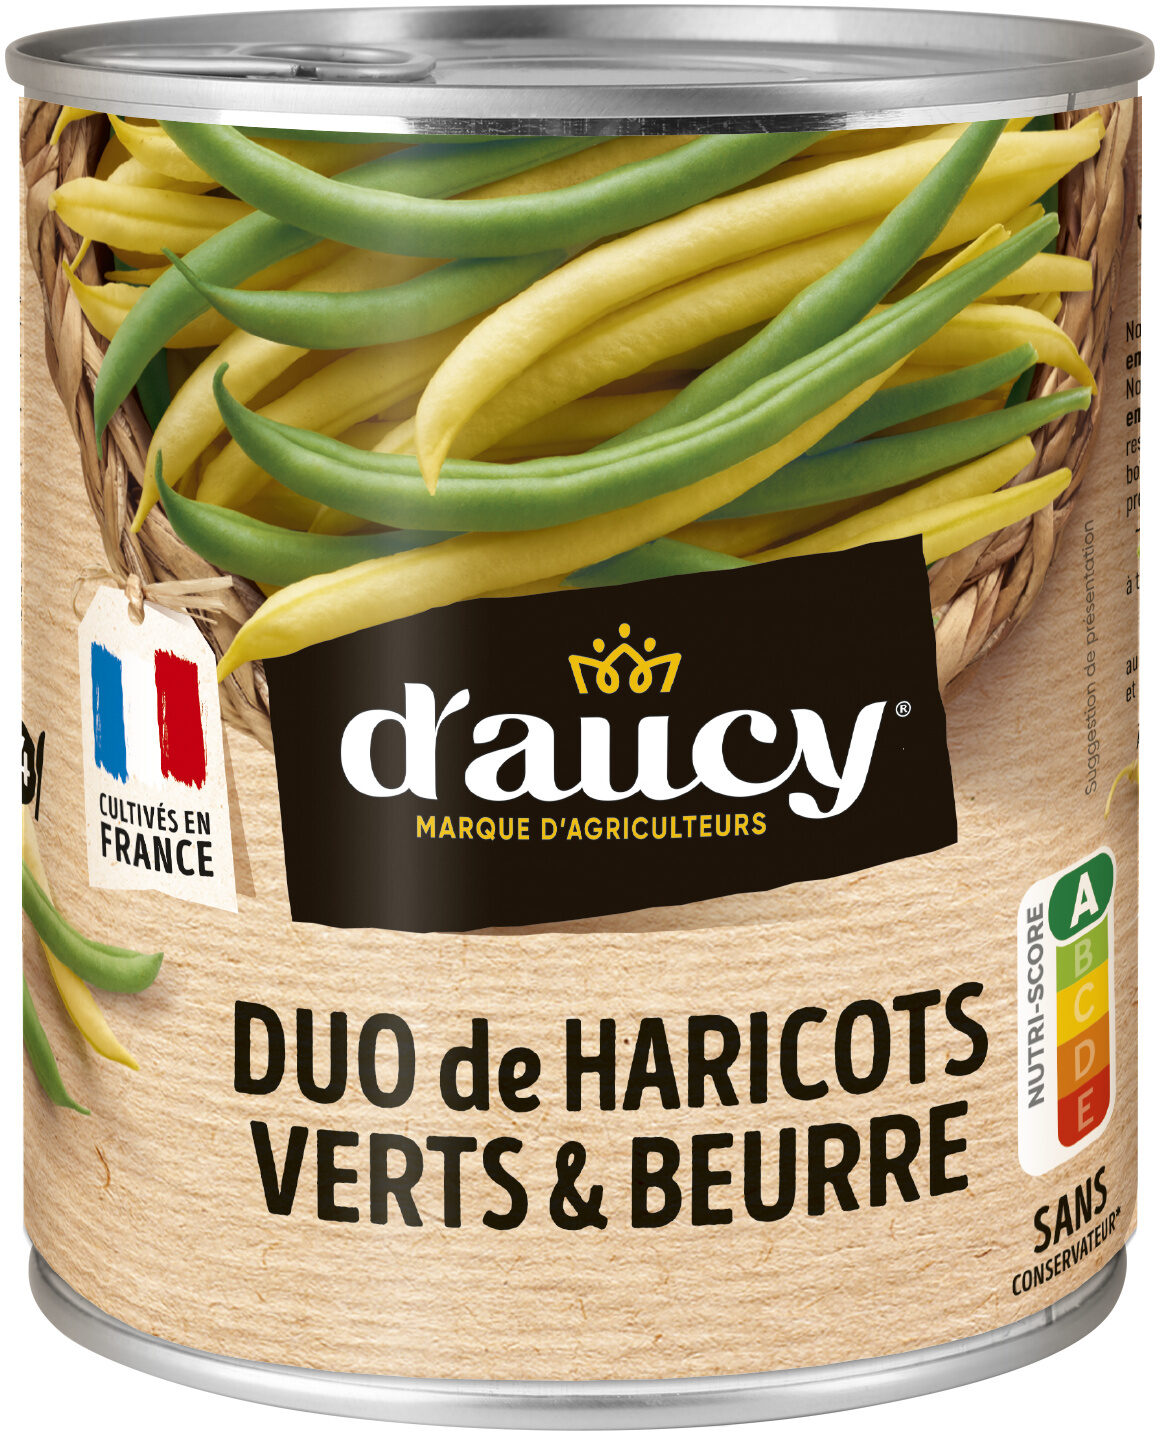 DUO DE HARICOTS VERTS & BEURRE - Product - fr